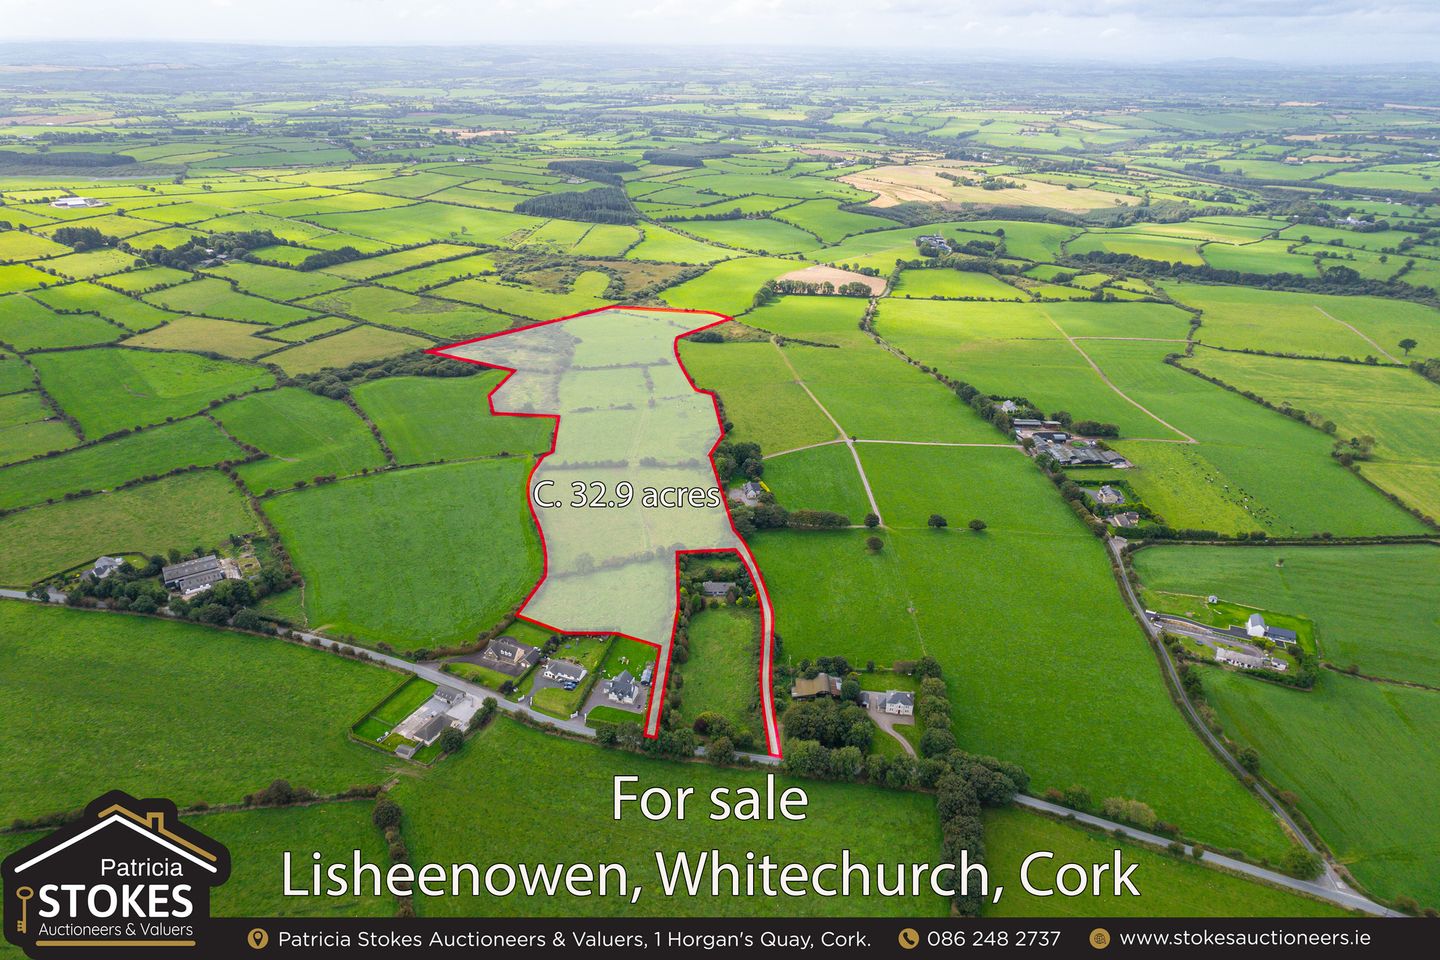 Lands at Lisheenowen, Whitechurch, Cork City, Co. Cork